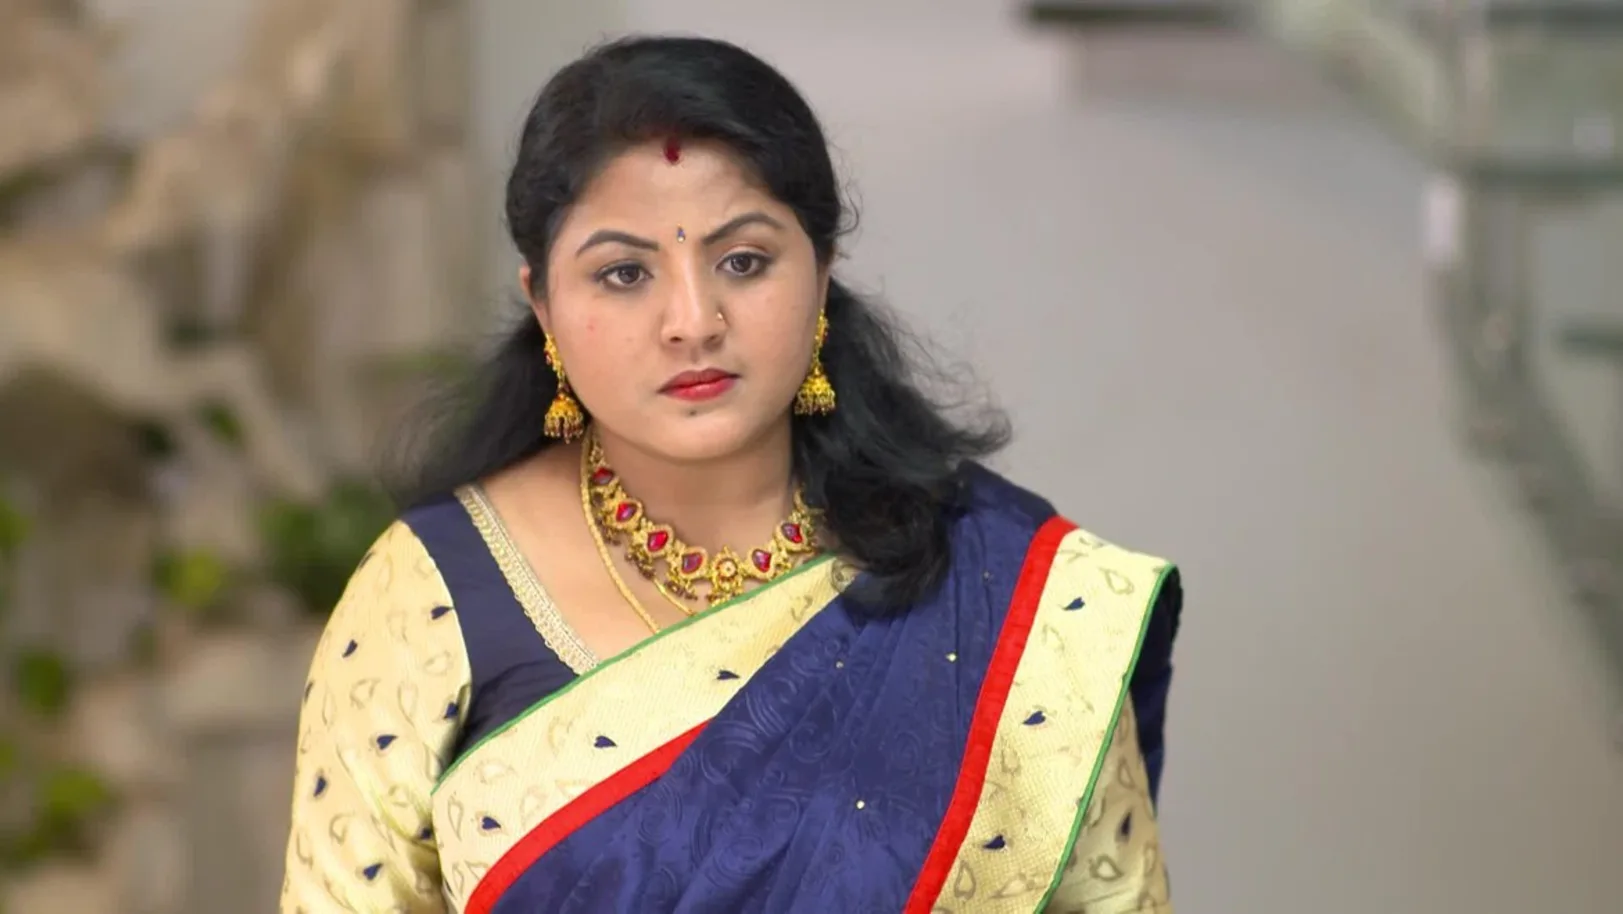 Prabhu's sister oppose Sathya staying at their home - Sathya Highlights 